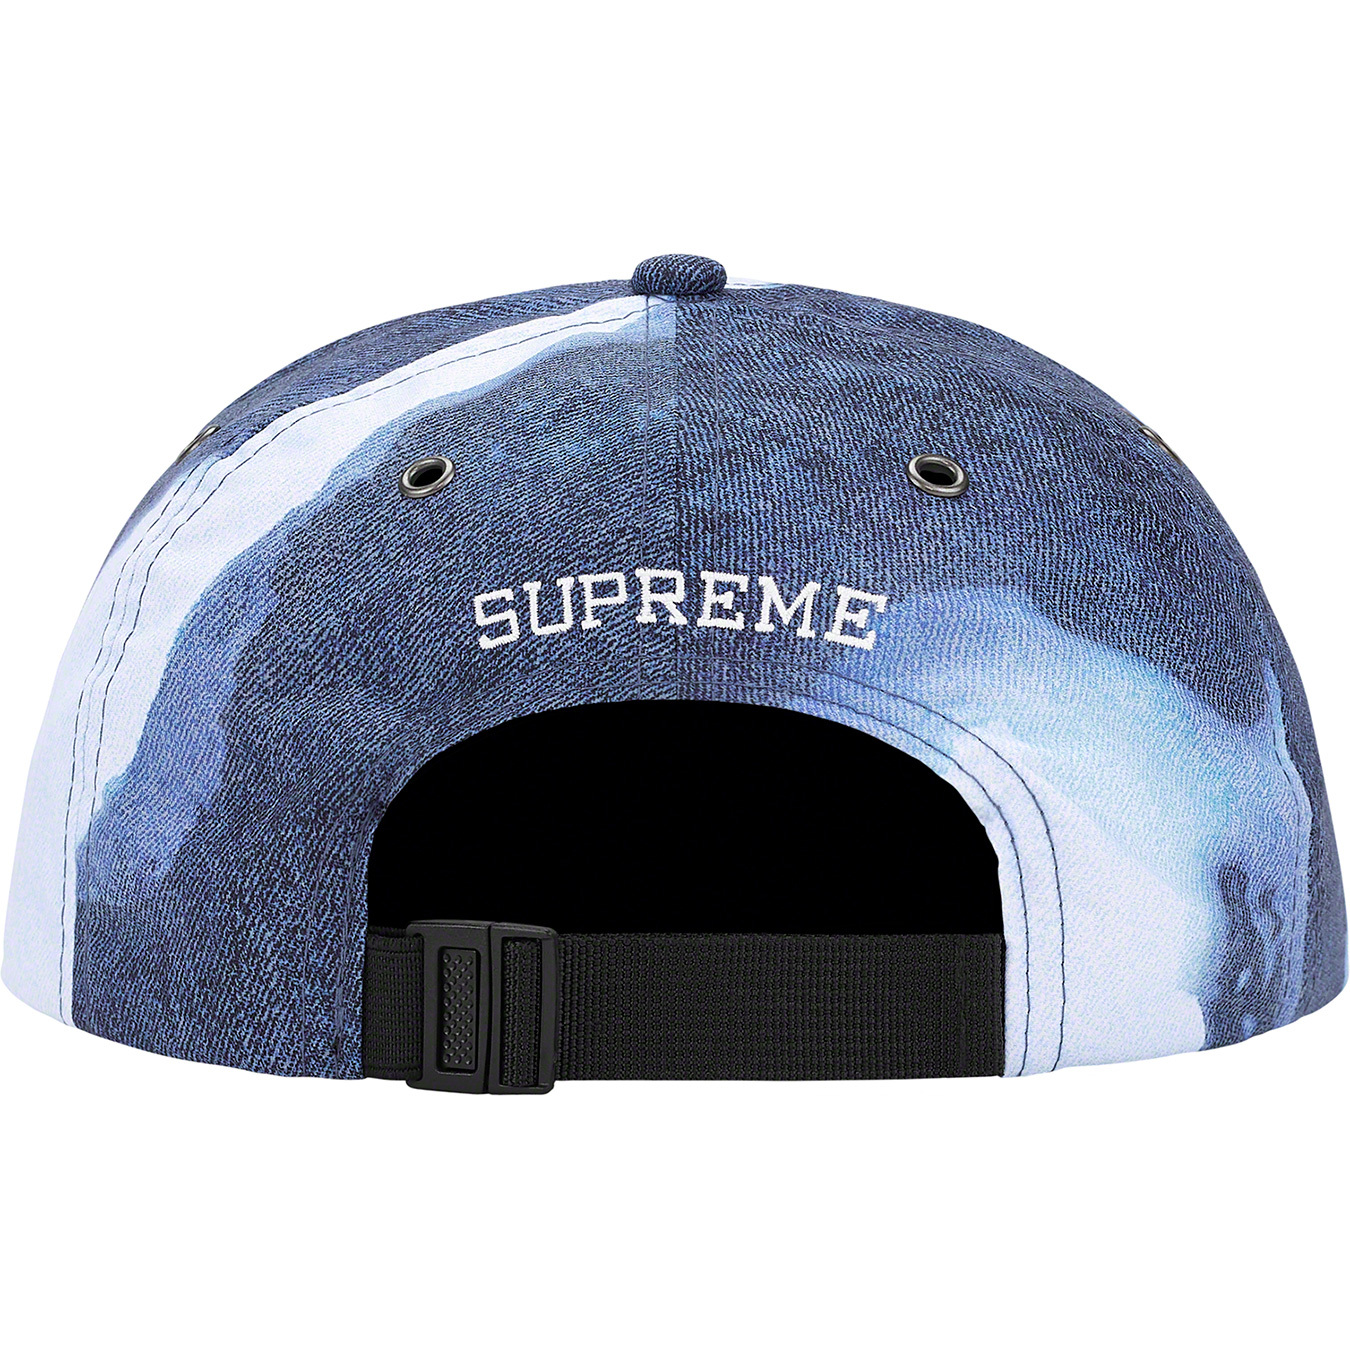 Supreme®/The North Face indigo cap